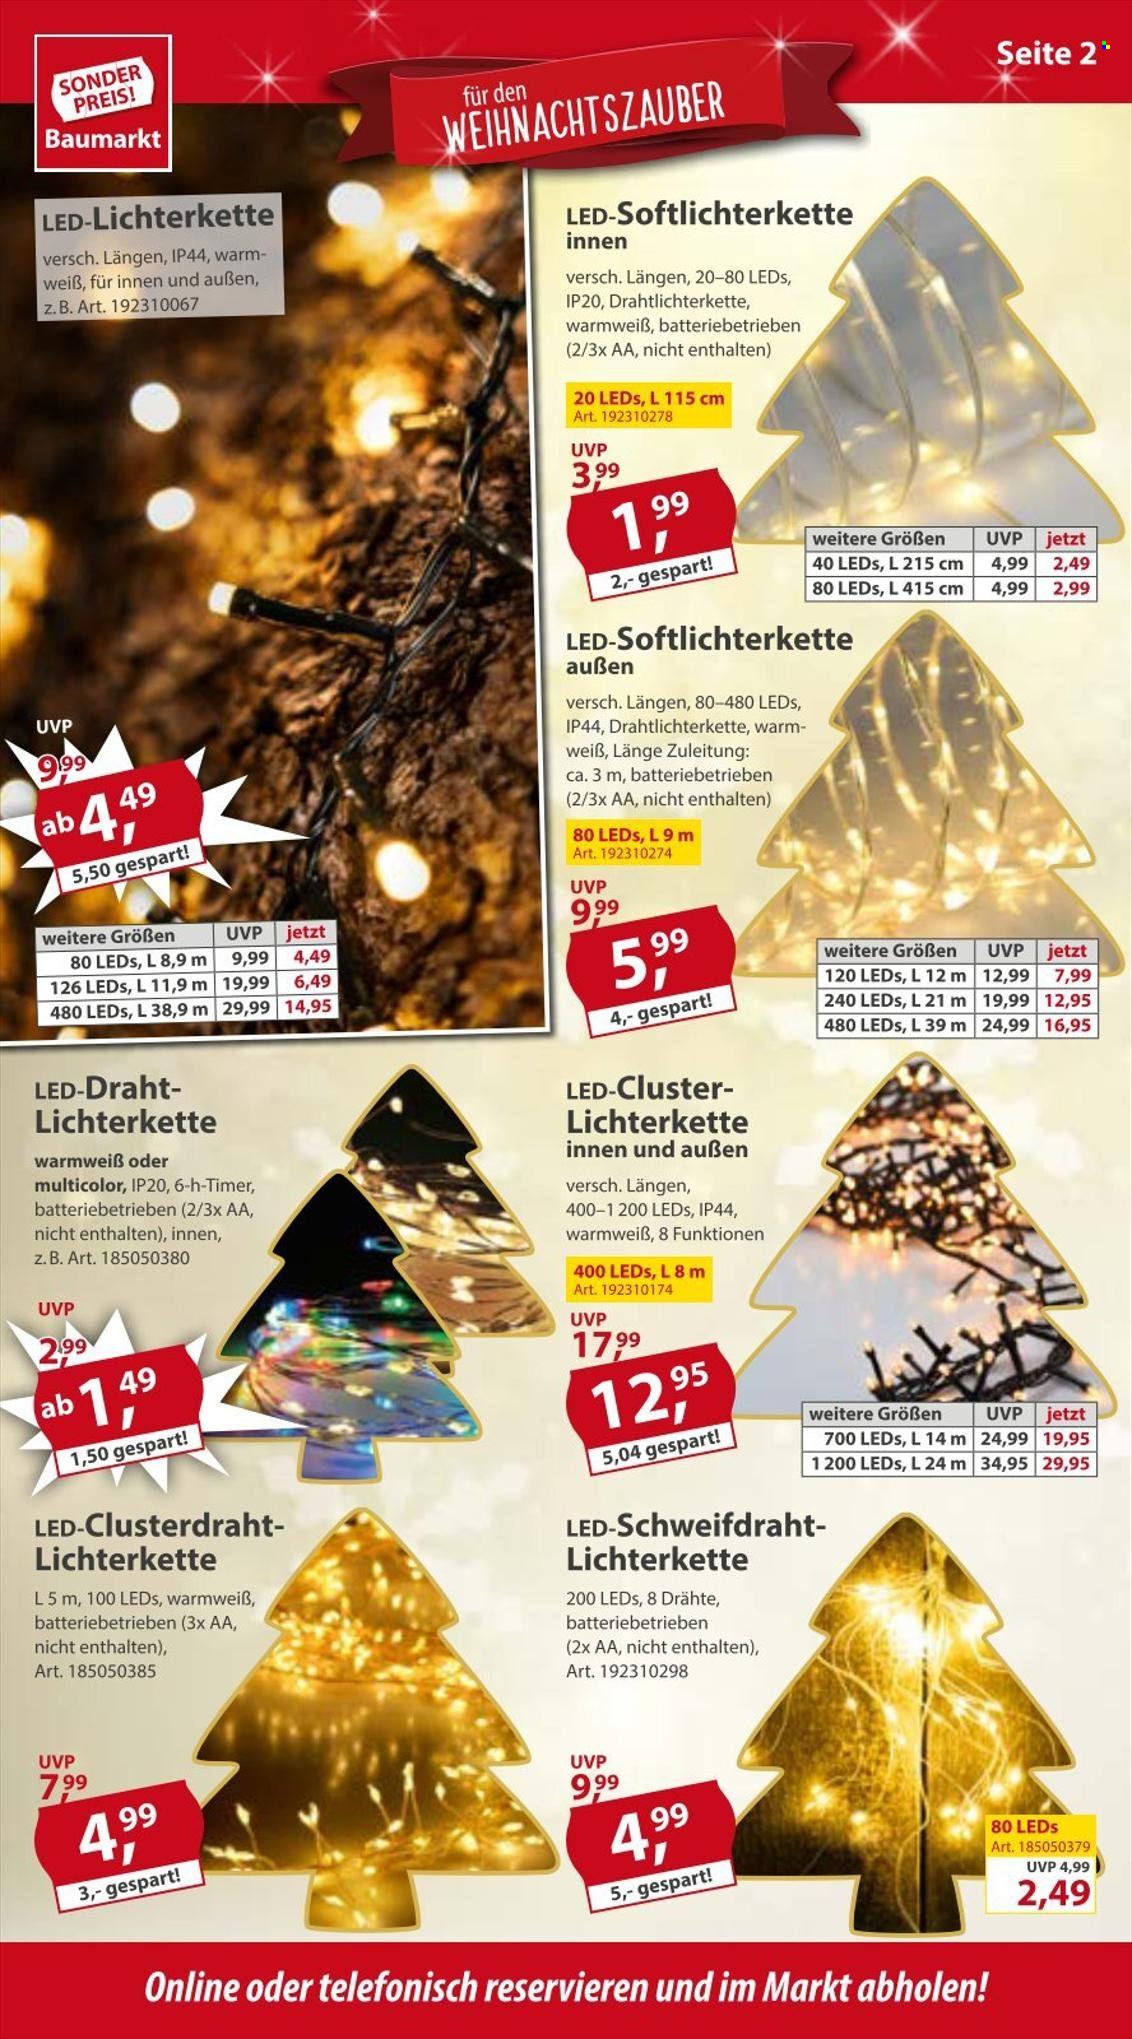 thumbnail - Prospekte Sonderpreis-Baumarkt - 26.11.2022 - 2.12.2022 - Produkte in Aktion - Lichterkette, Draht. Seite 2.